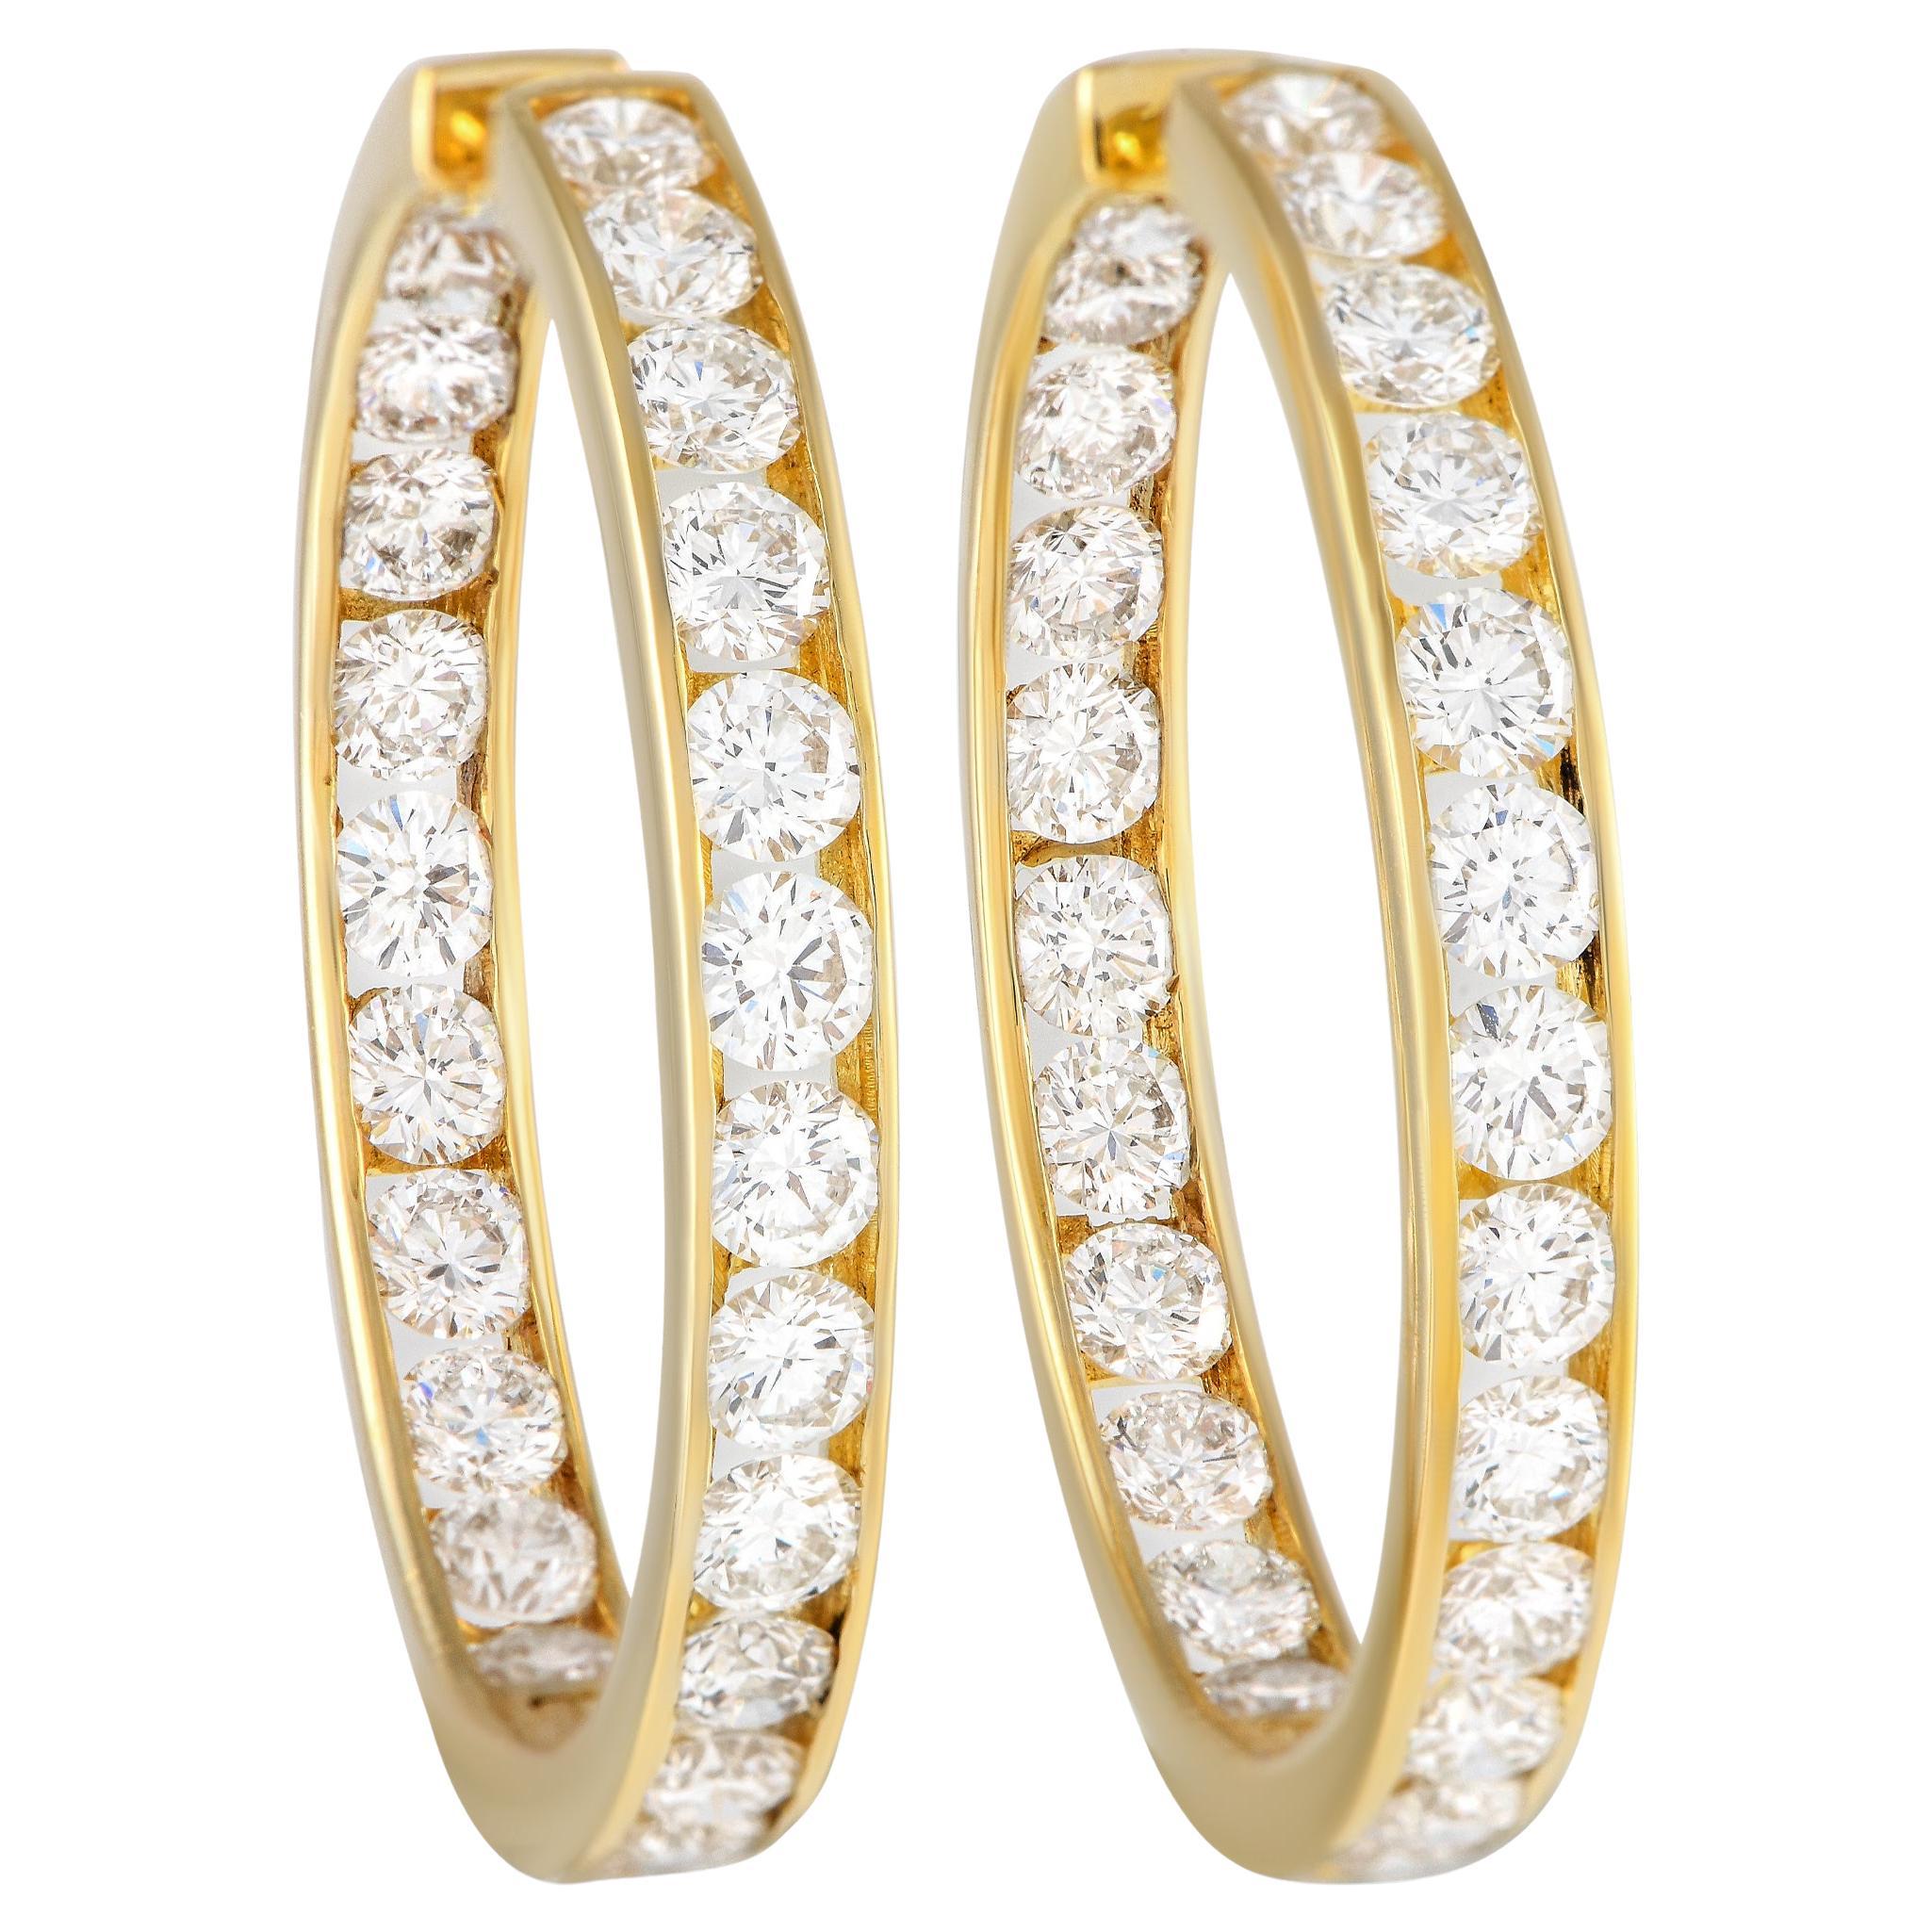 18K Yellow Gold 7.20ct Diamond Inside-Out Hoop Earrings